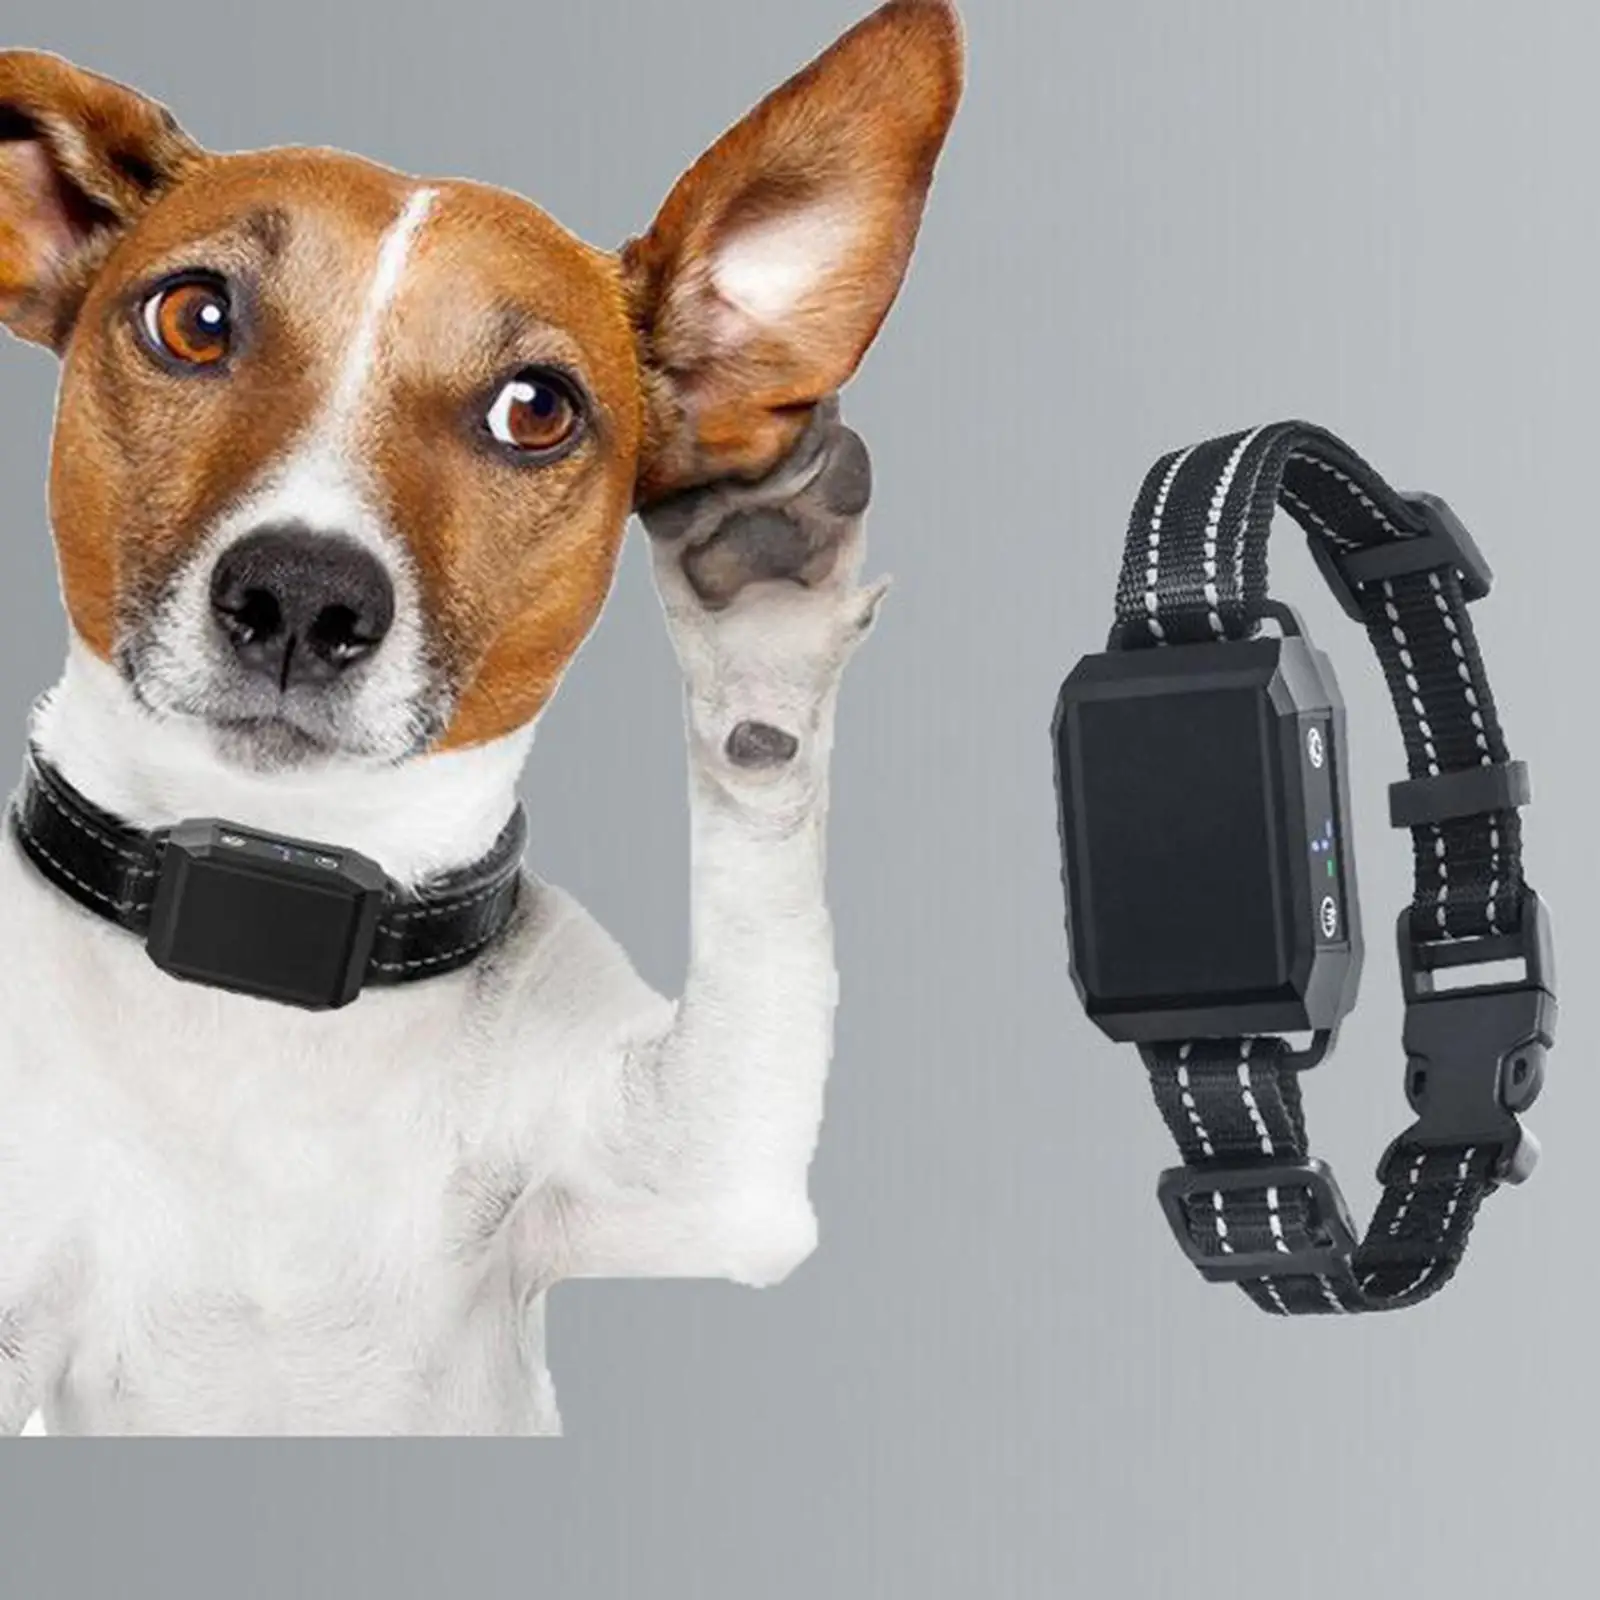 Dog Bark Control Collar Stop Barking Dog Trainer Vibration Behavior Correct for Dog Dog Training